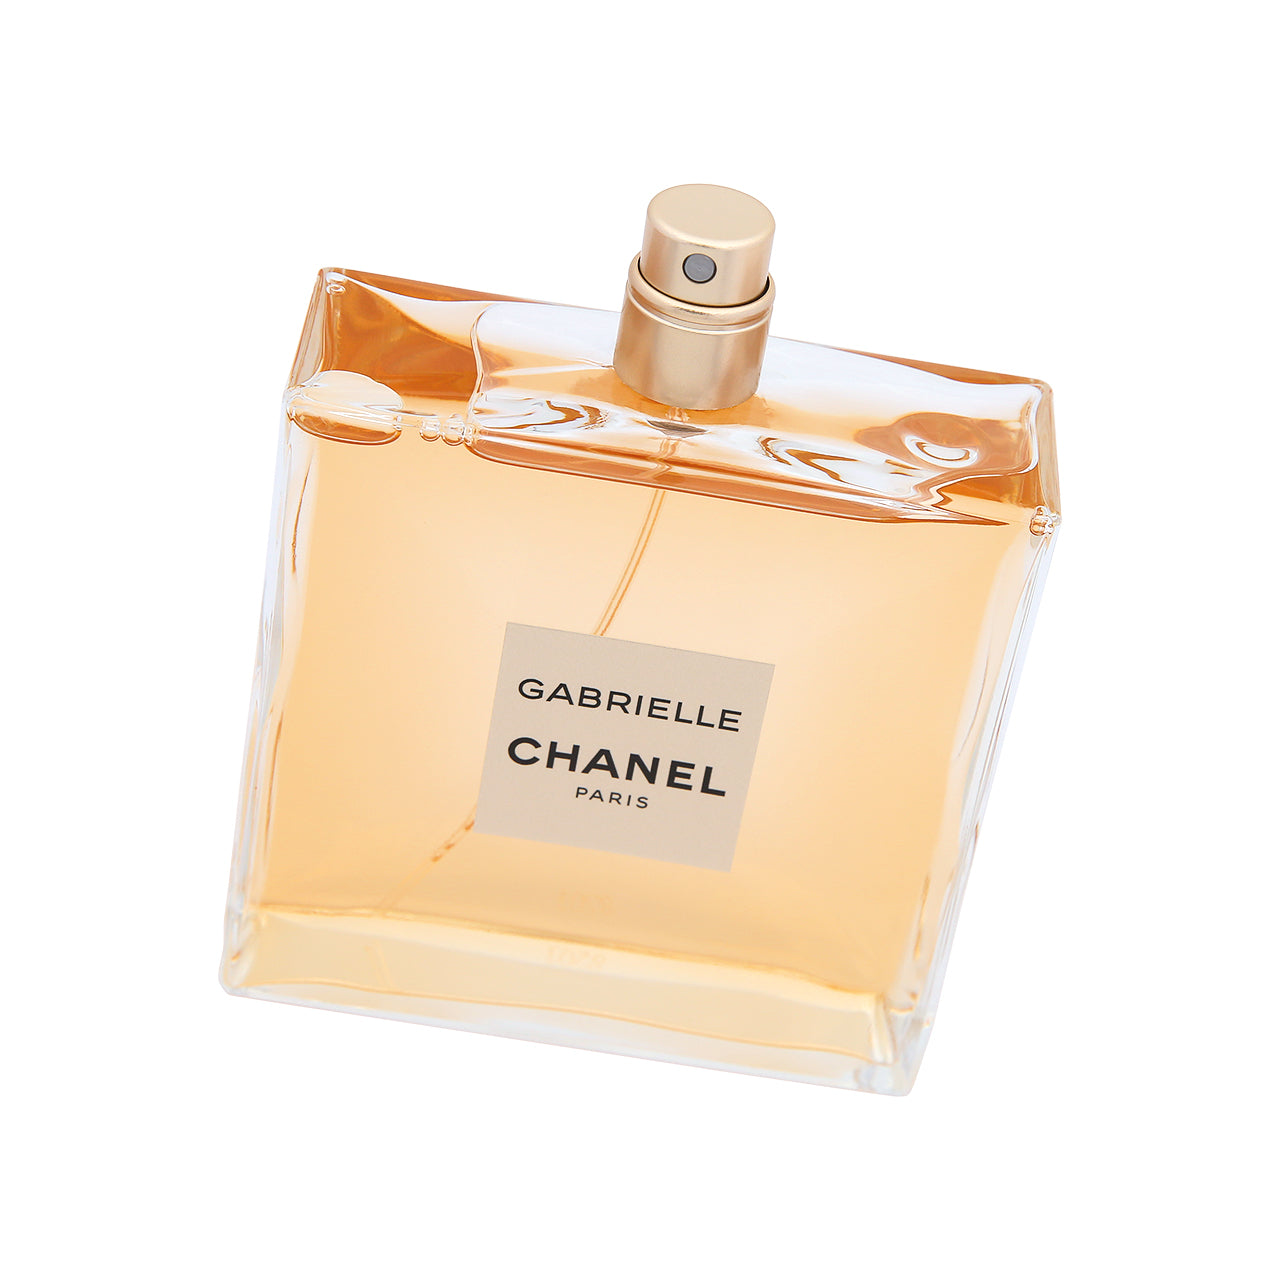 Chanel GABRIELLE CHANEL Eau de Parfum Spray 100ml